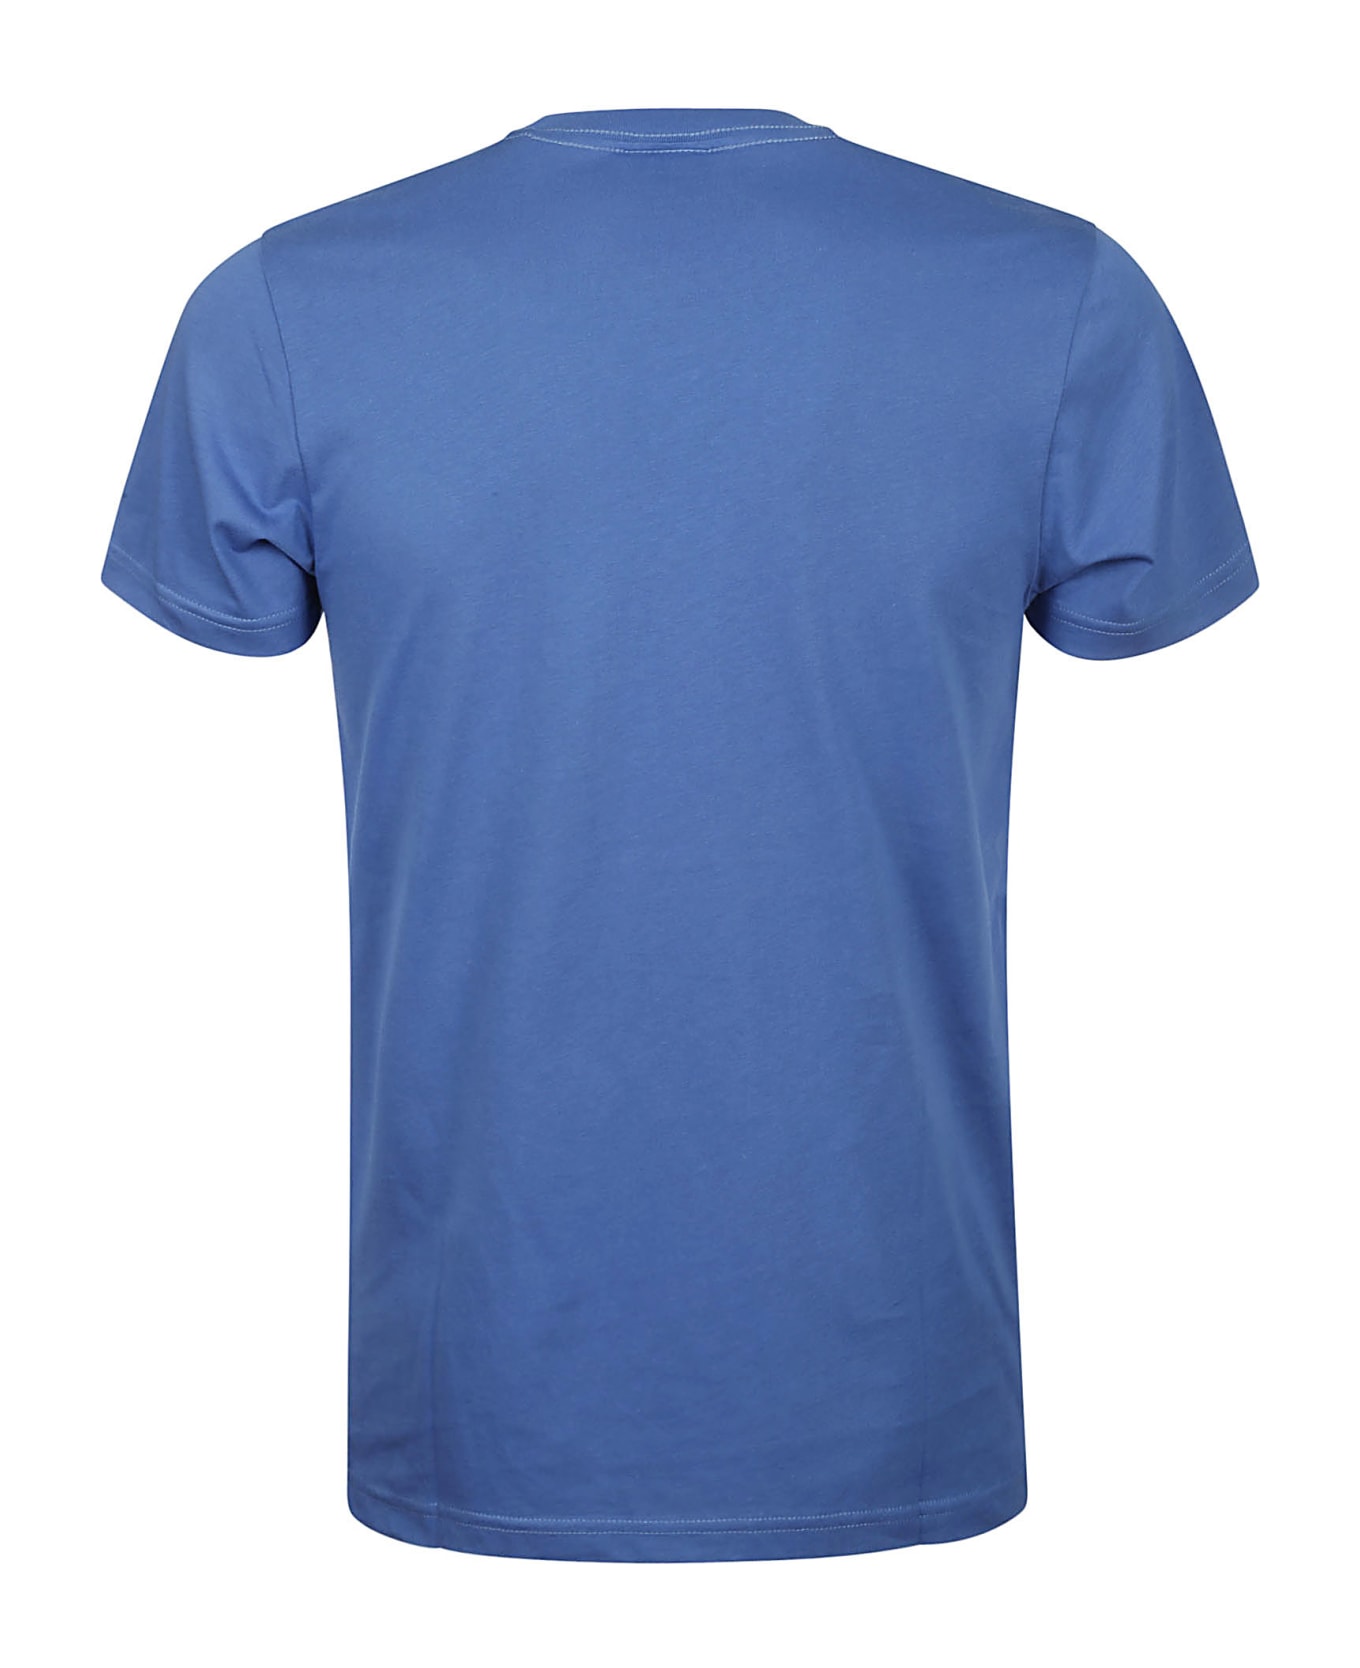 Paul Smith Slim Fit T-shirt B&w Zebra - H Petrol Blue シャツ